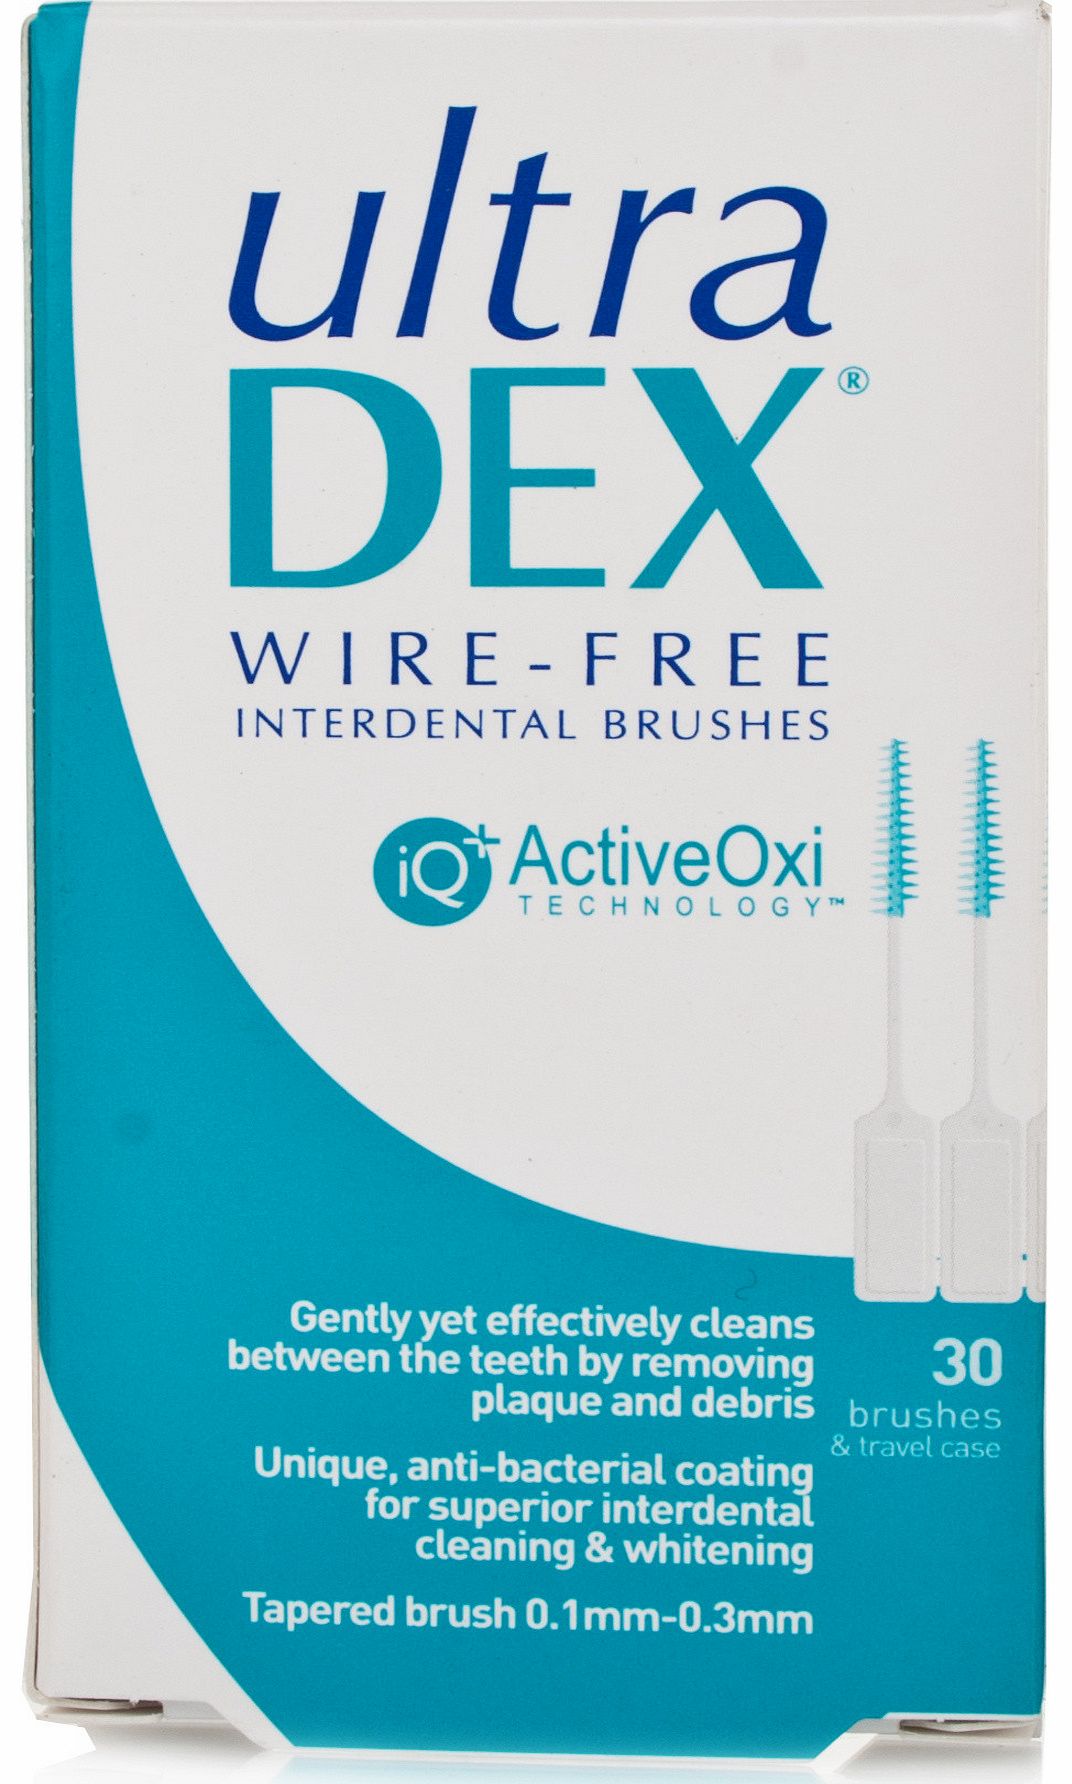 Ultradex Wire-free Interdental Brushes